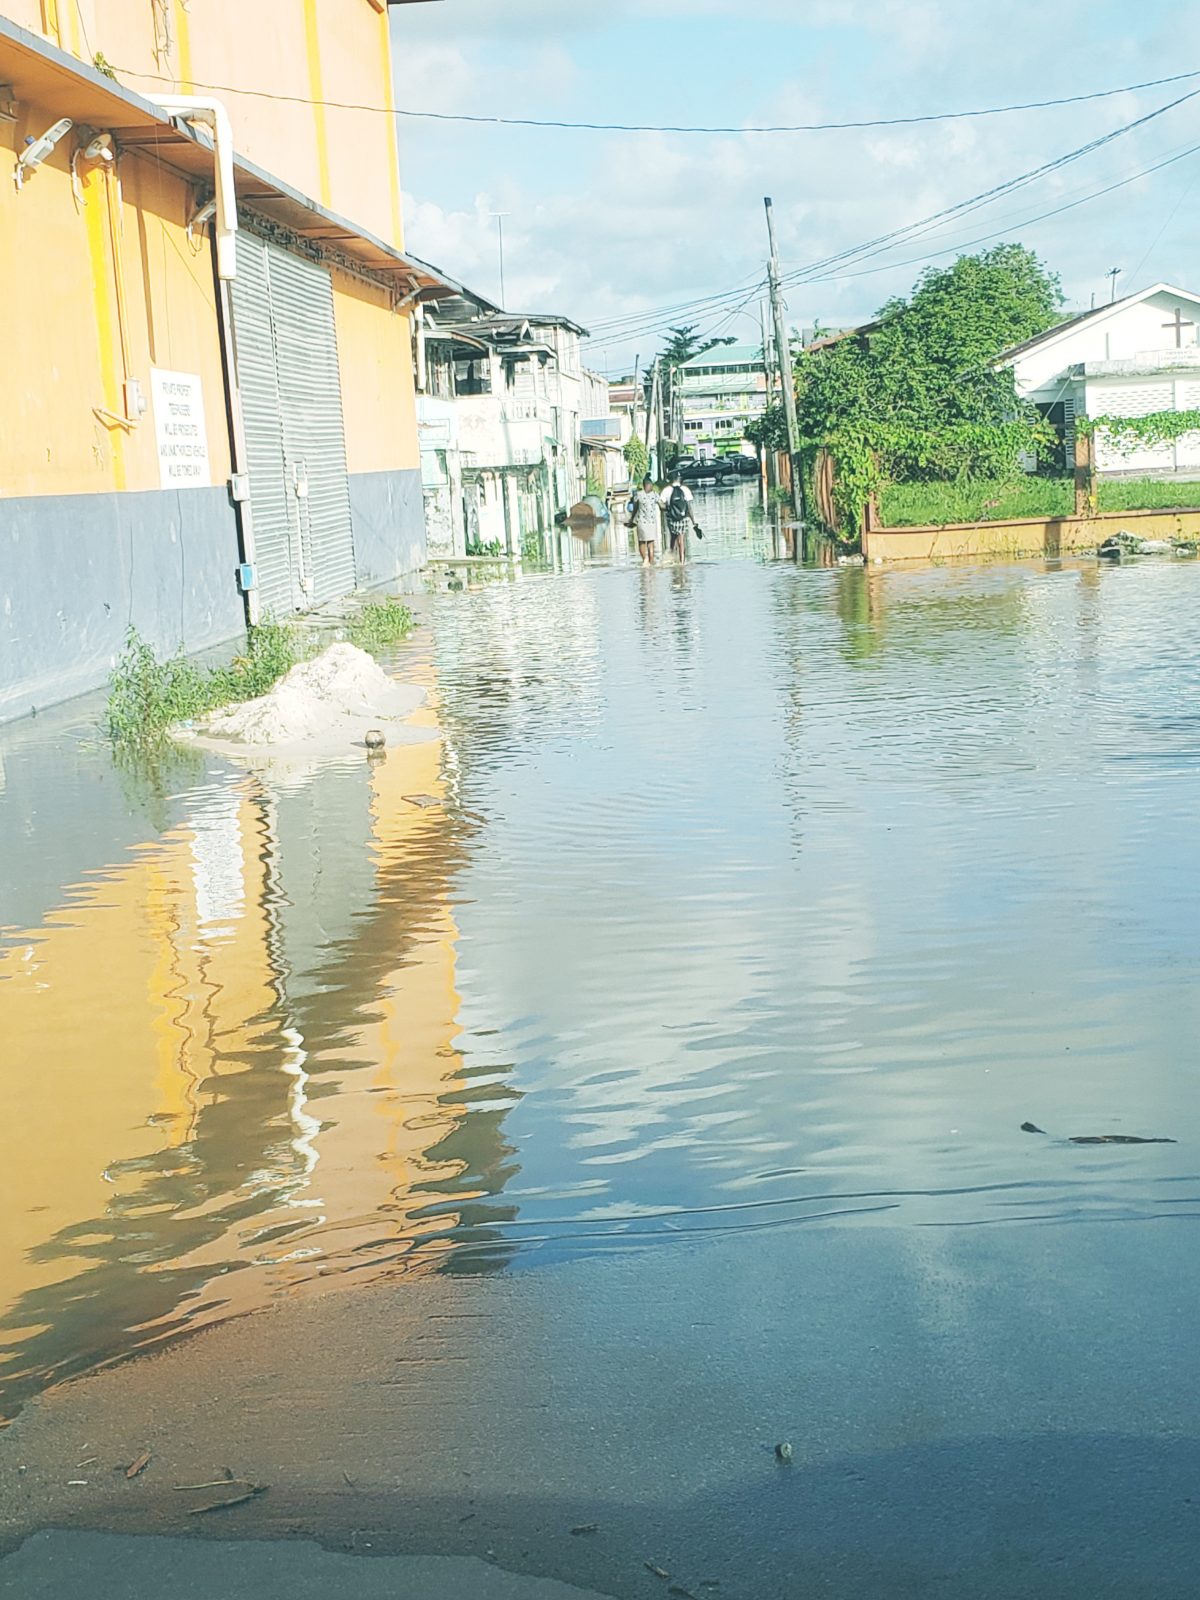 Drysdale Street under water